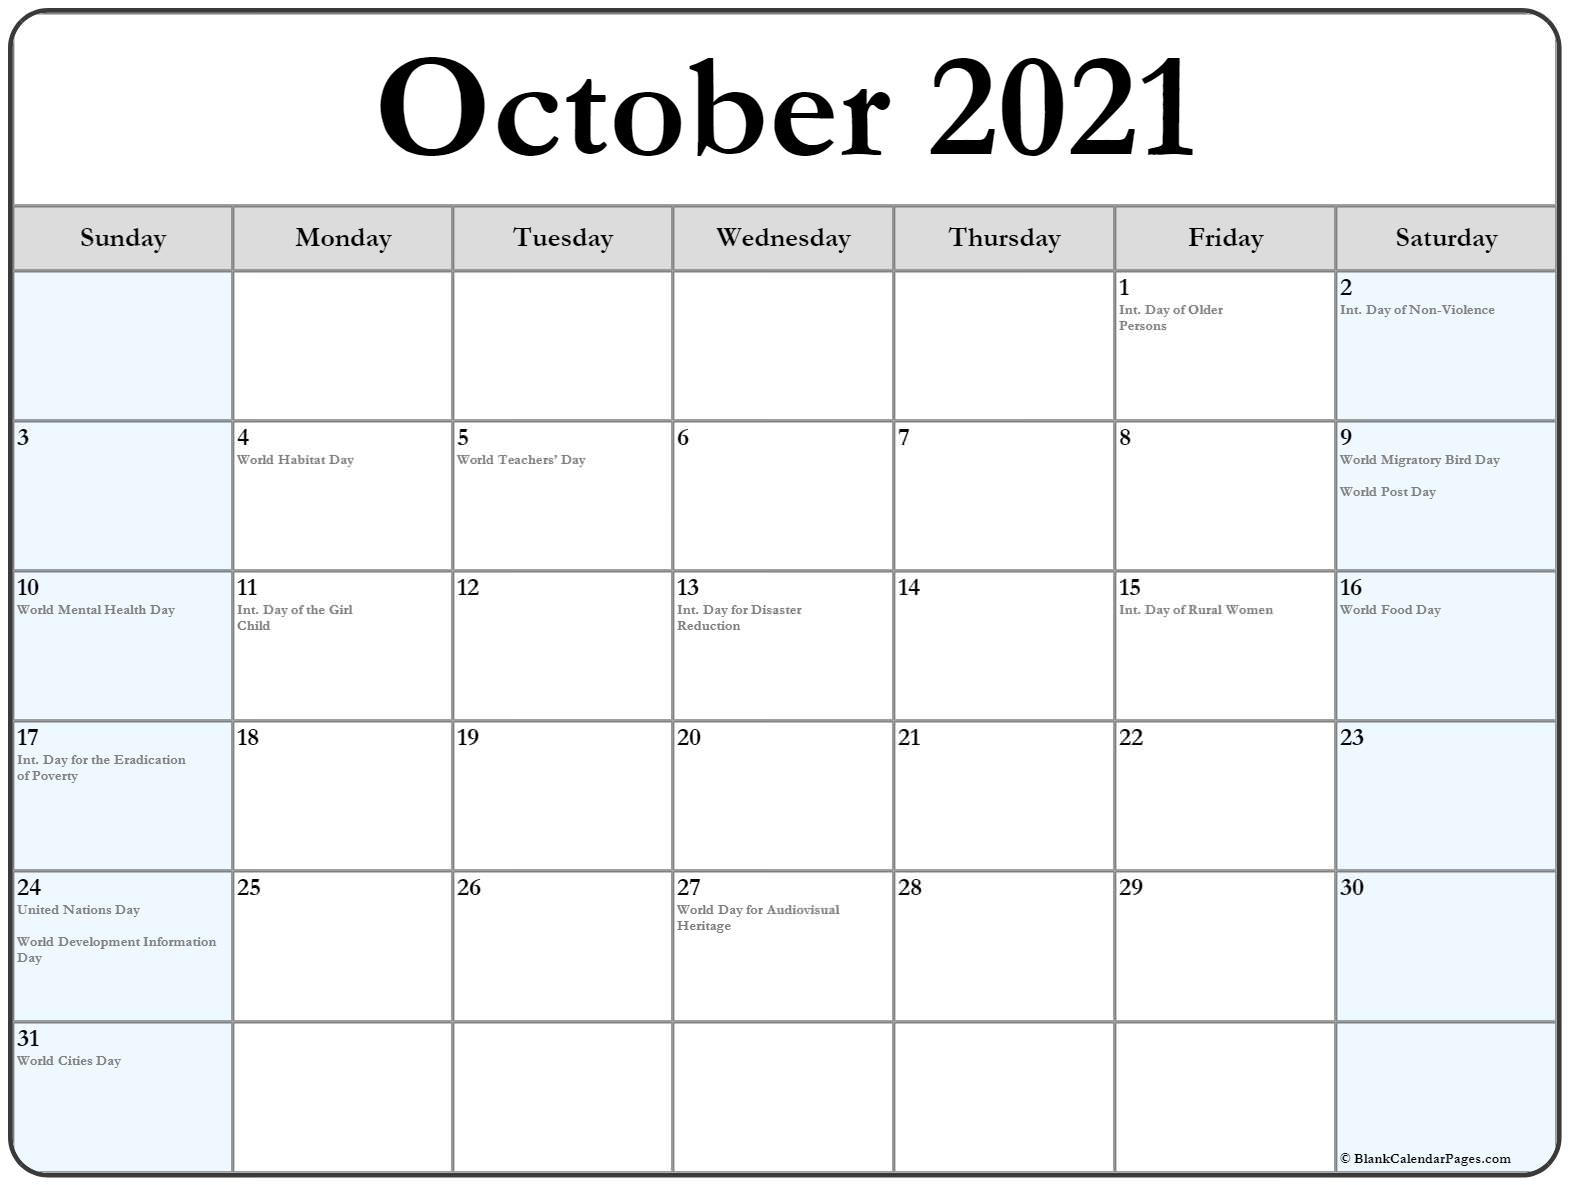 October 2021 Calendar With Holidays - Calendar Template 2021 December 2021 Calendar Wiki